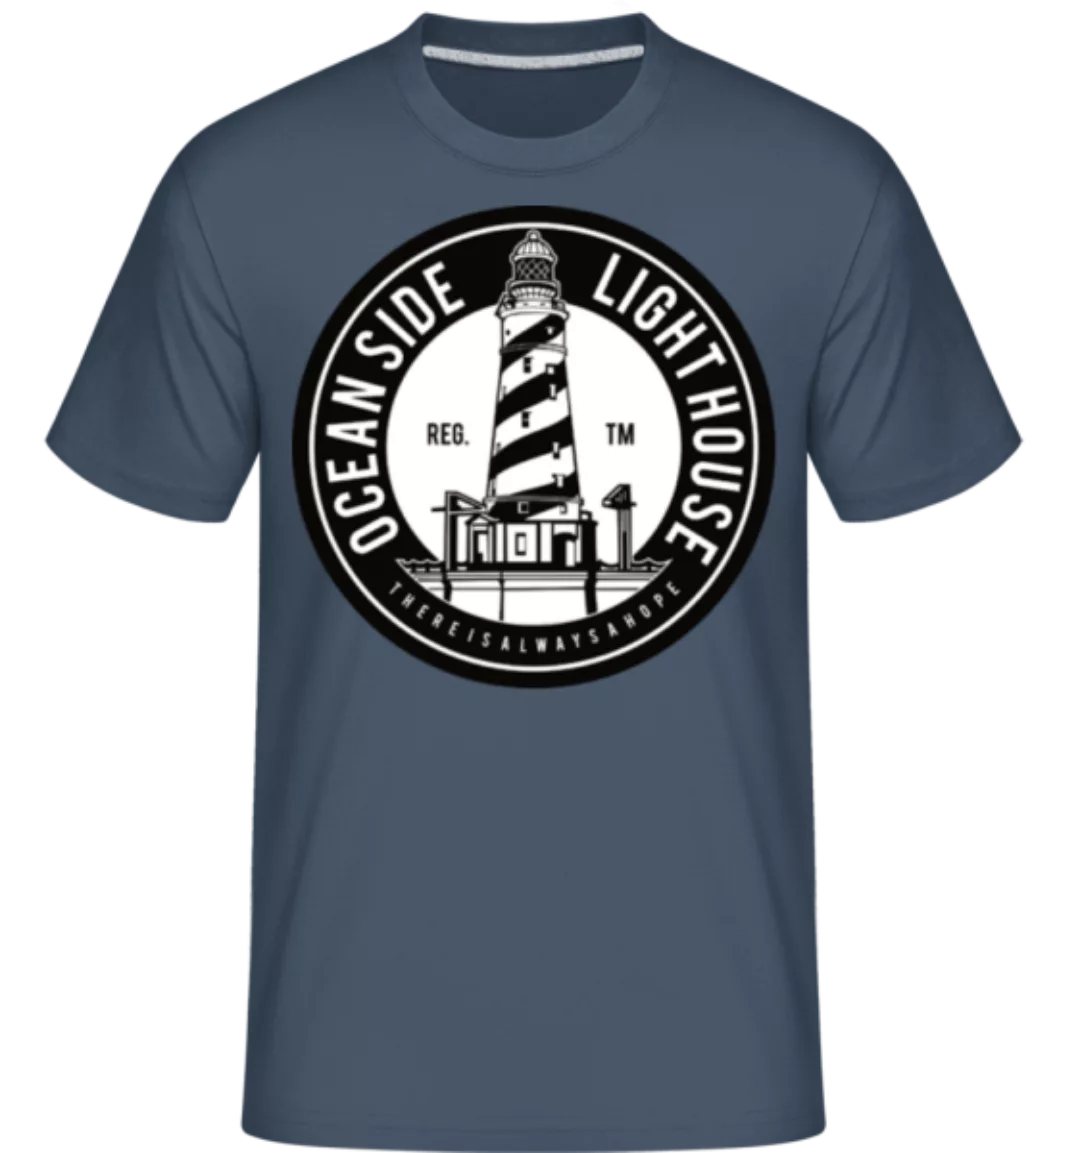 Ocean Side Light House · Shirtinator Männer T-Shirt günstig online kaufen